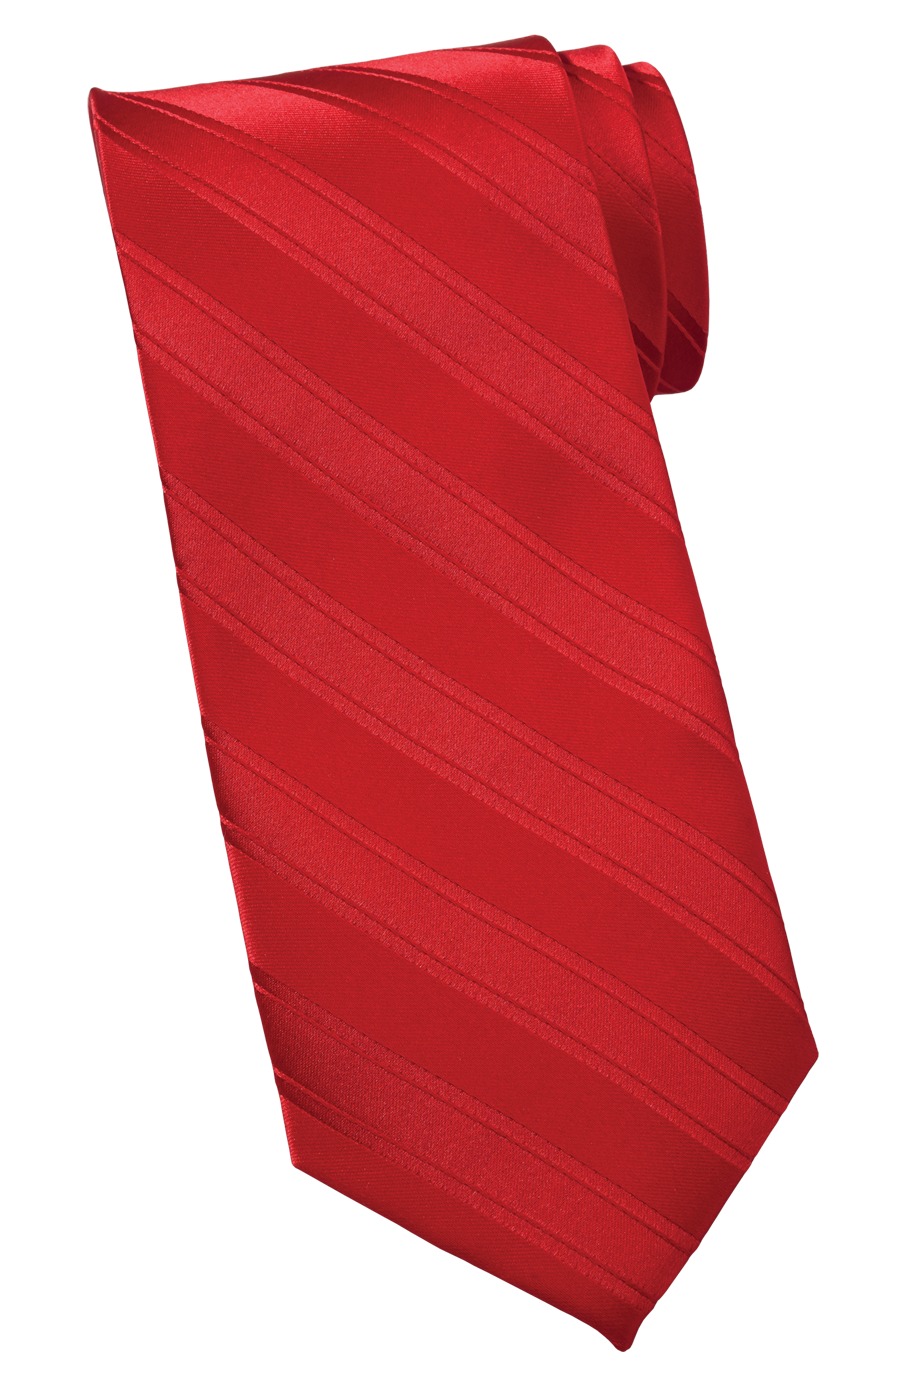 Edwards Garment TS00 - Tonal Stripe Tie